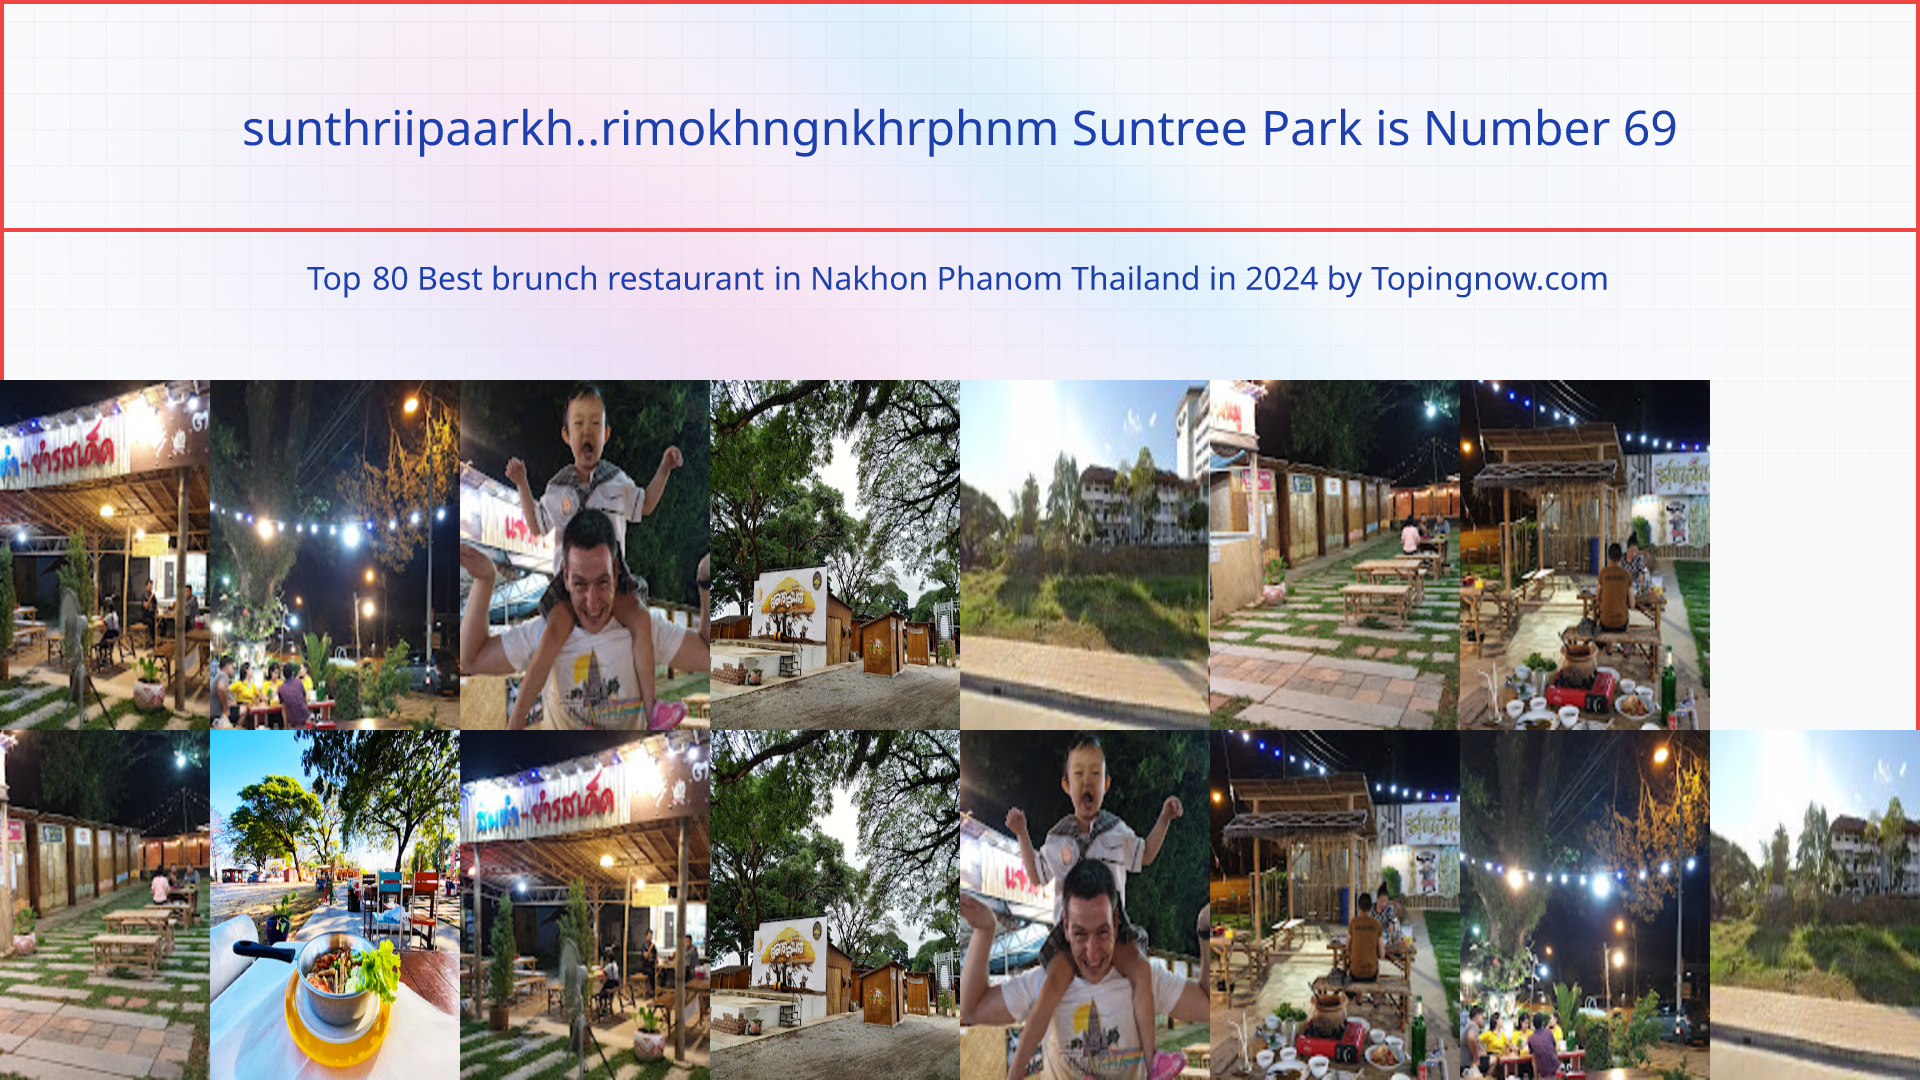 sunthriipaarkh..rimokhngnkhrphnm Suntree Park: Top 80 Best brunch restaurant in Nakhon Phanom Thailand in 2024